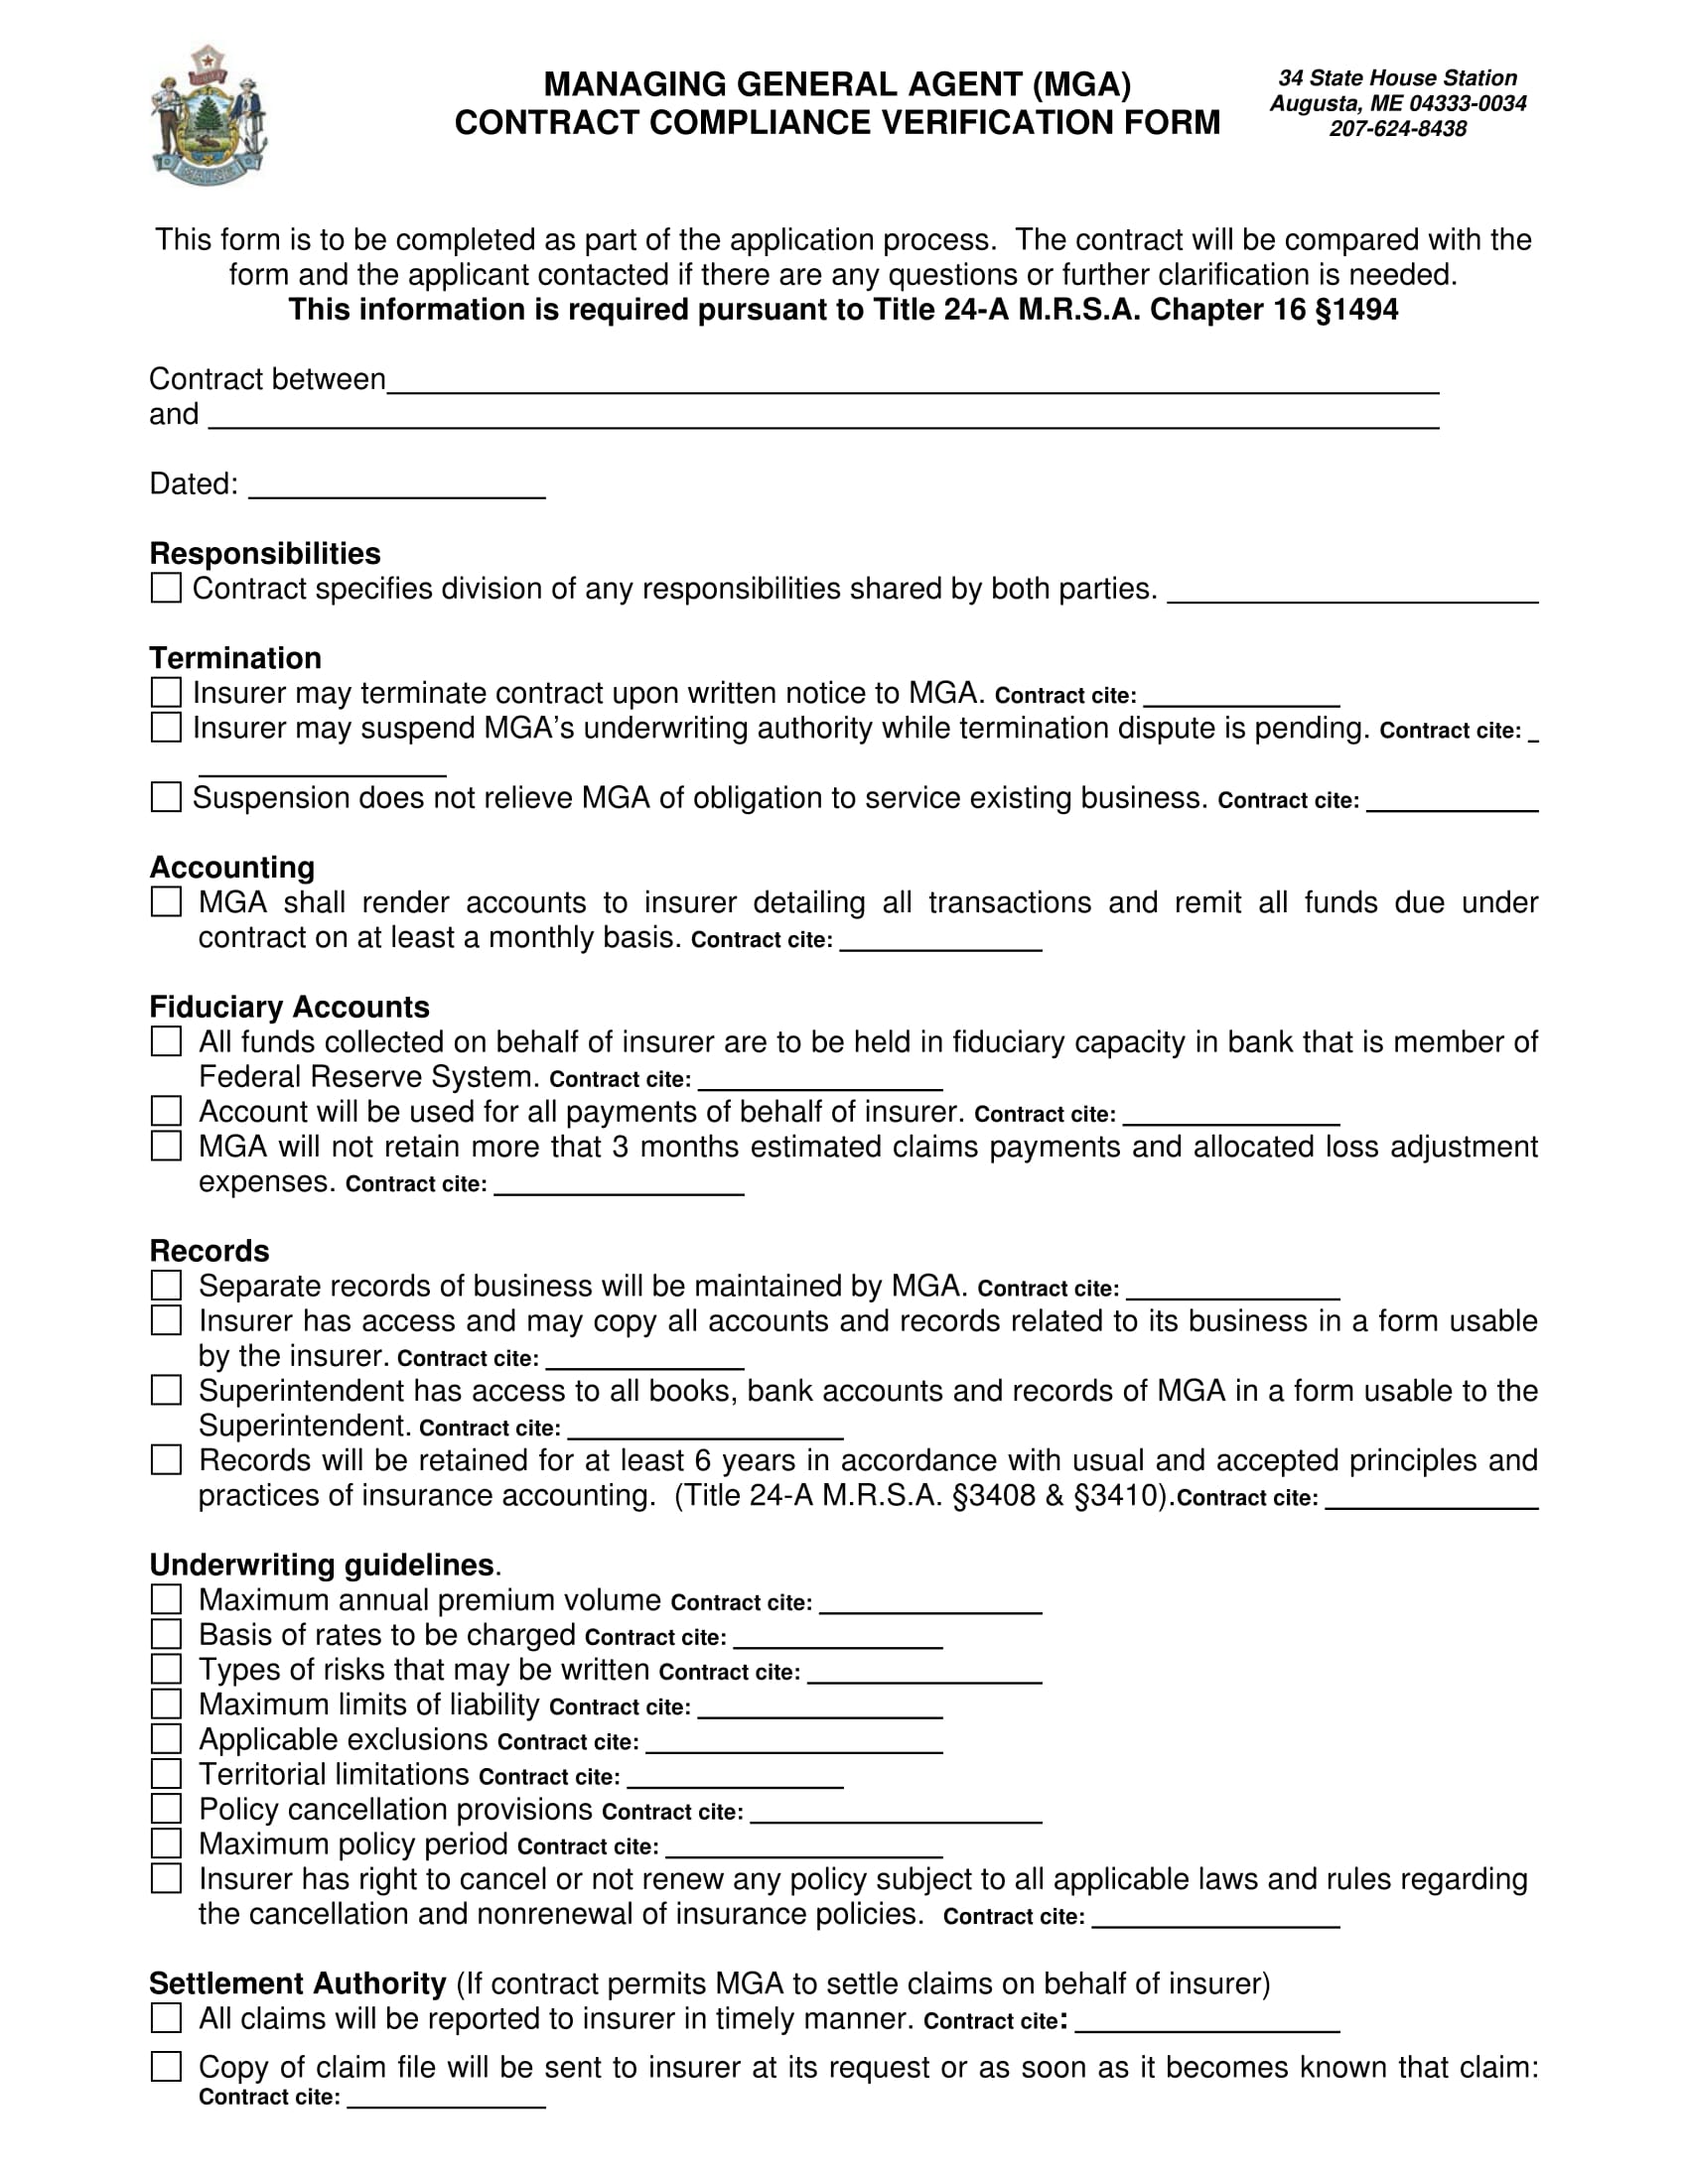 contract compliance verification form 1